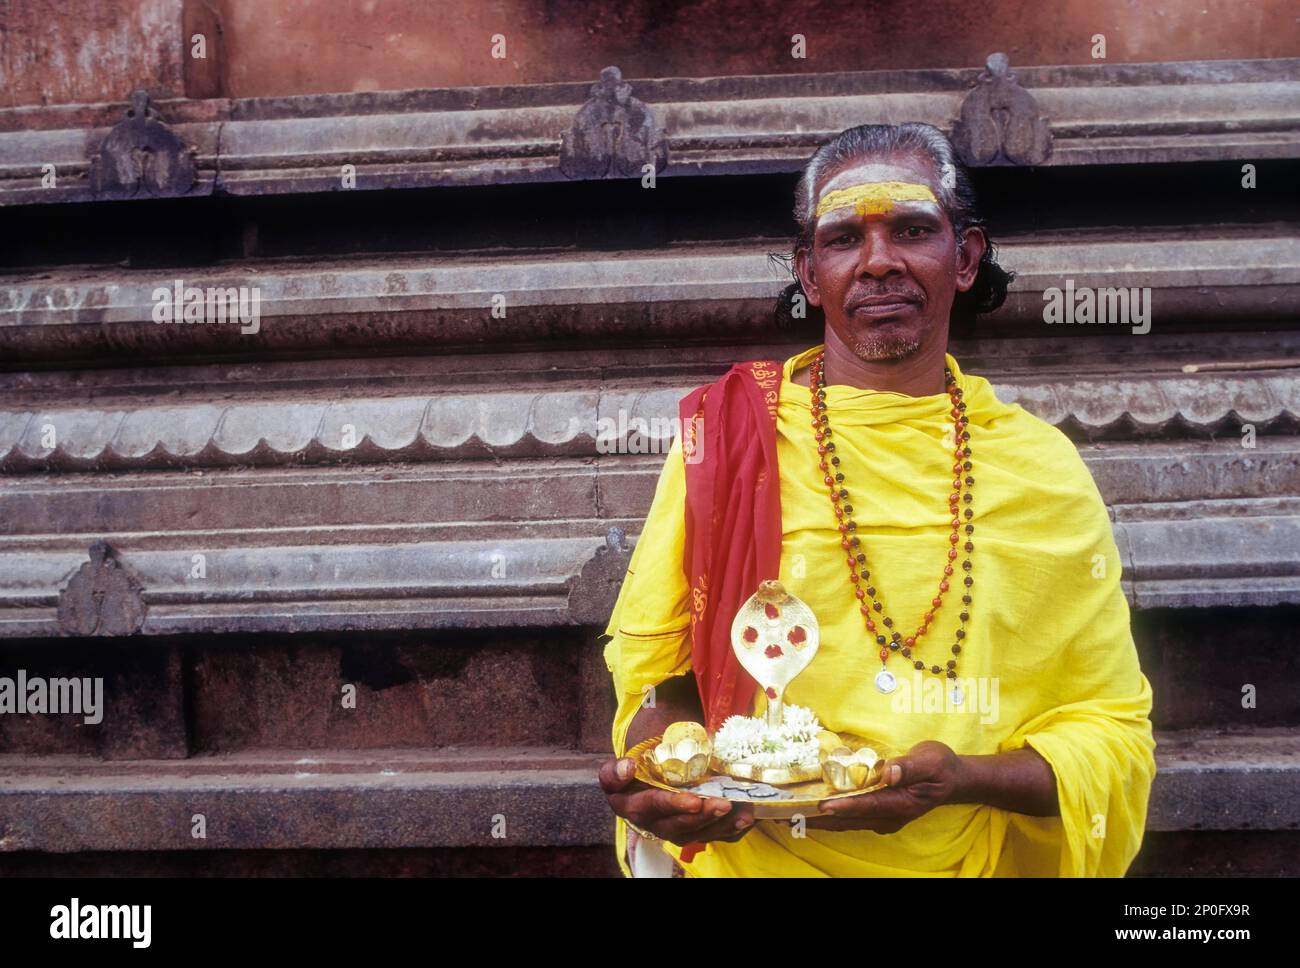 V. Moorthy â€“ Beggar standing with idol naga, Lord Murugan temple in Palani near Coimbatore, Tamil Nadu, India Stock Photo